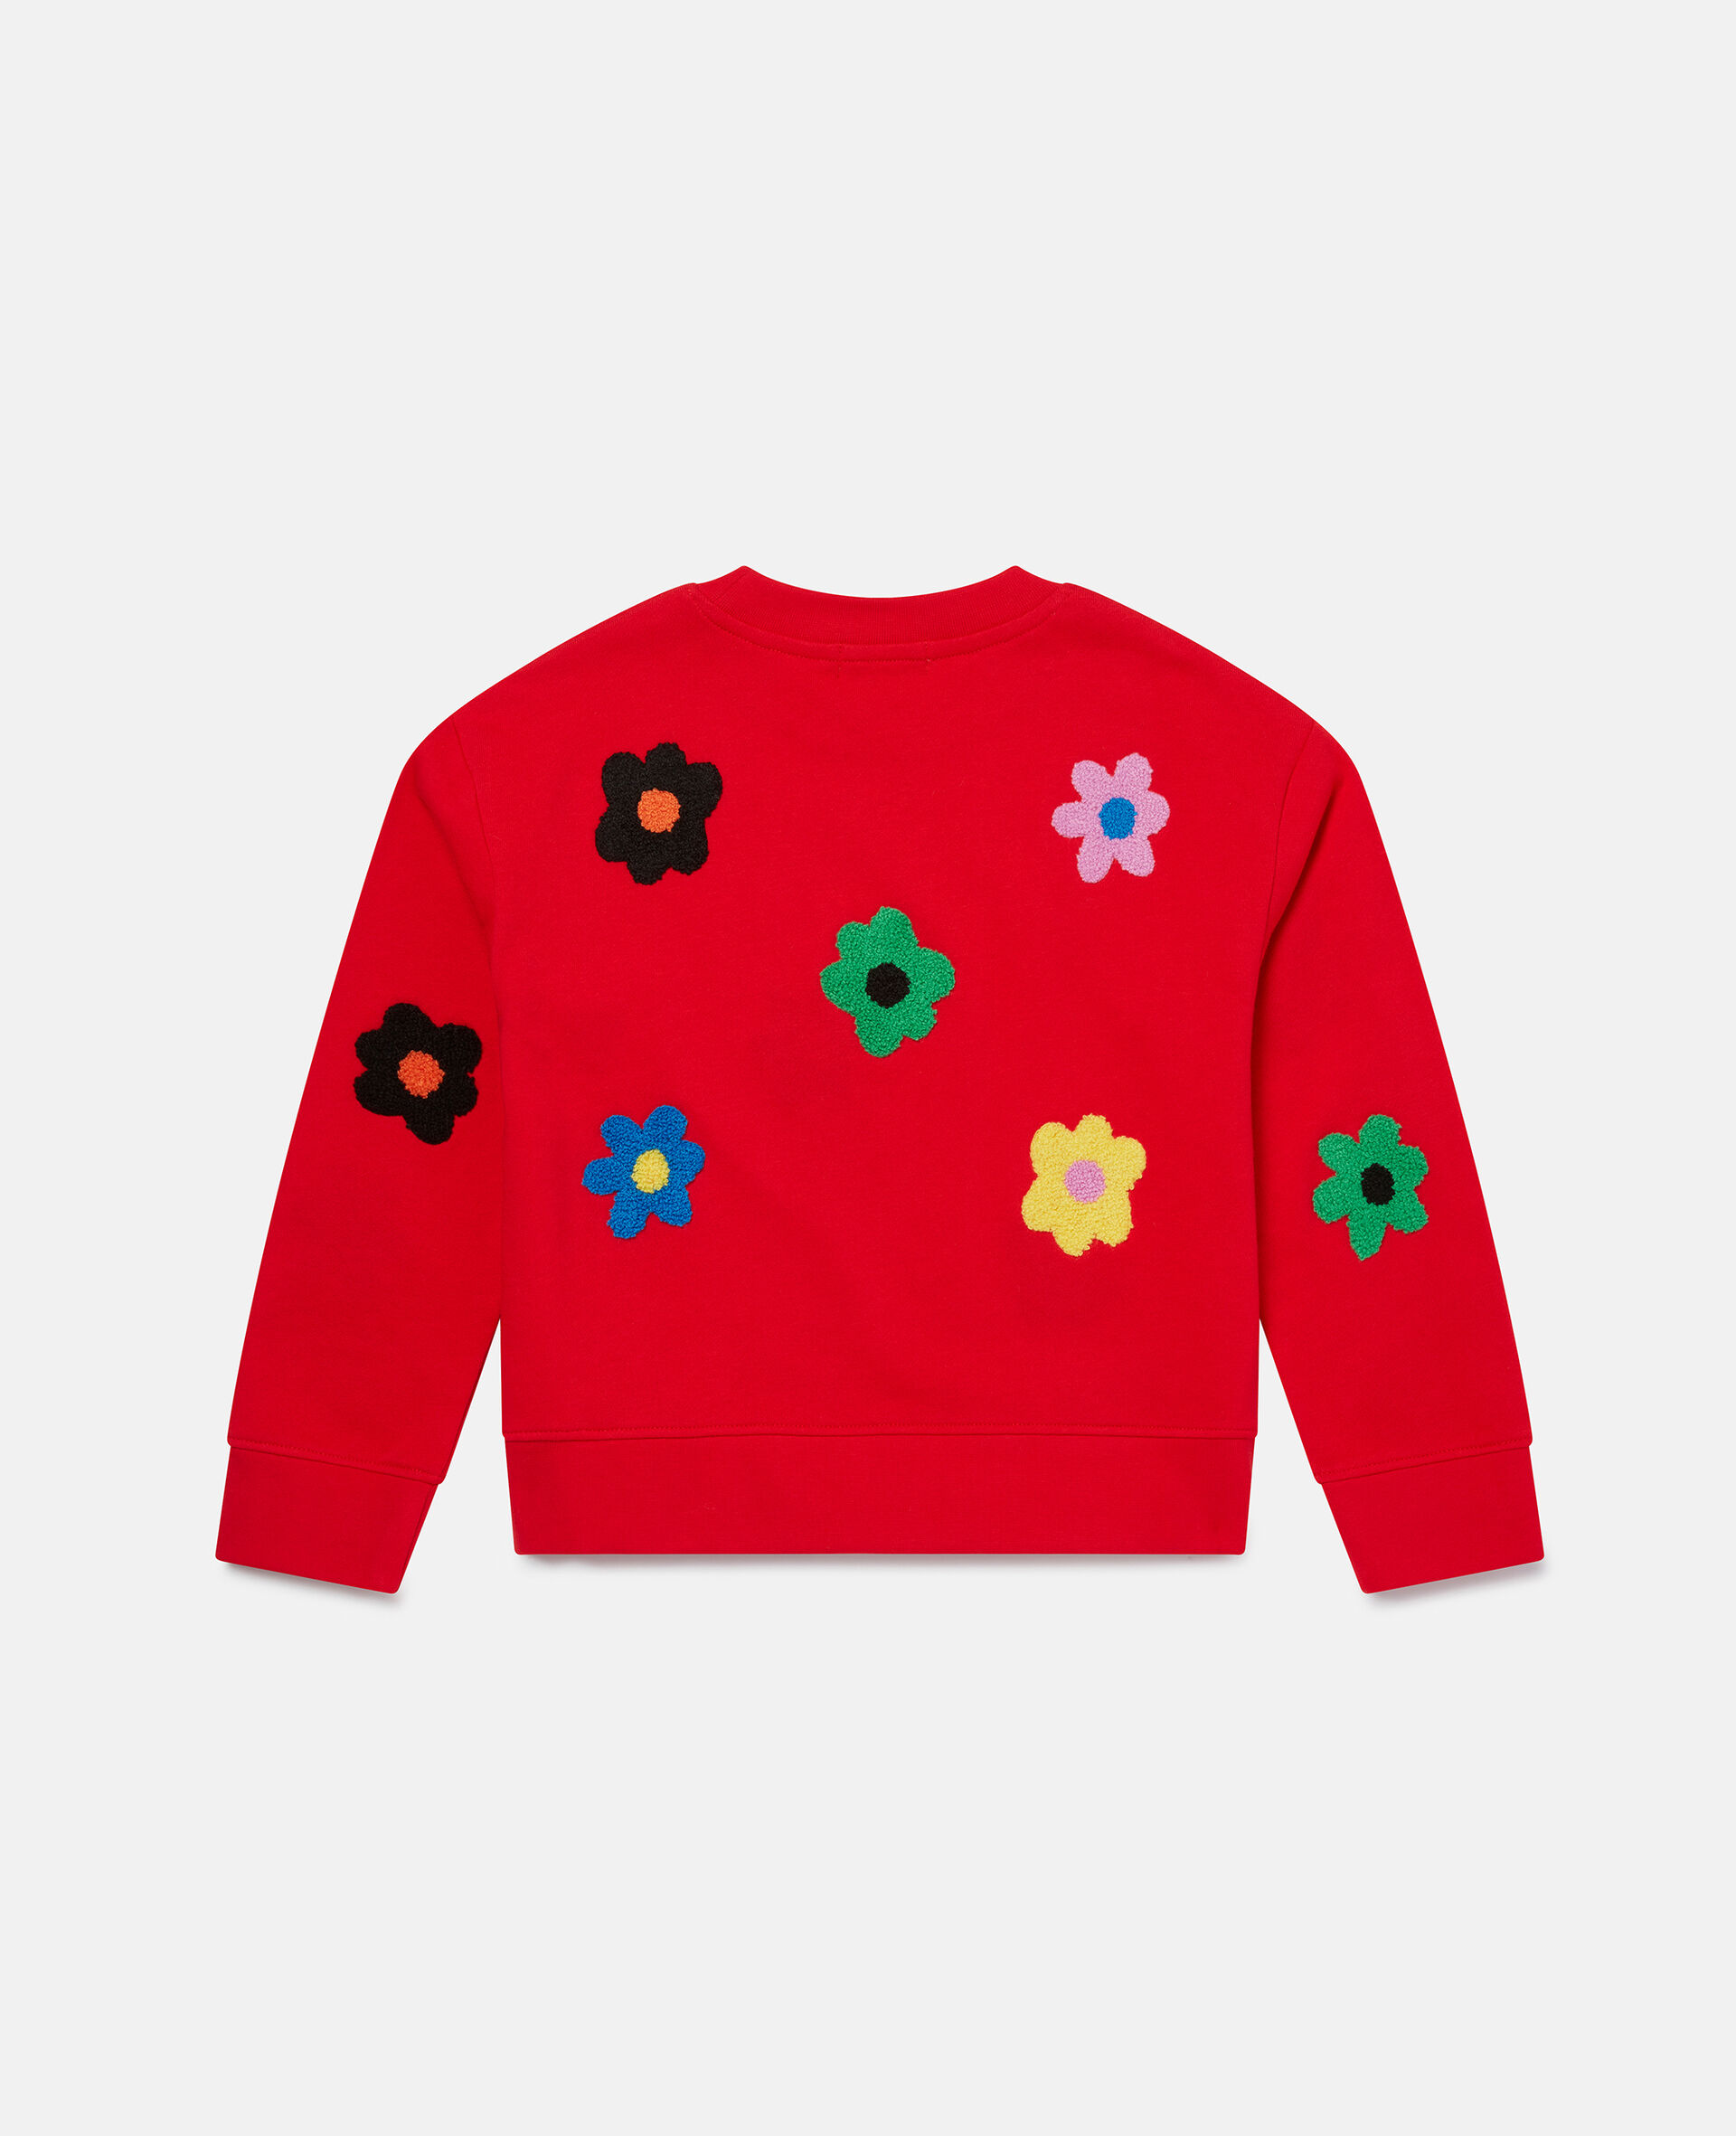 Flower Embroidered Fleece Sweatshirt-Red-large image number 2